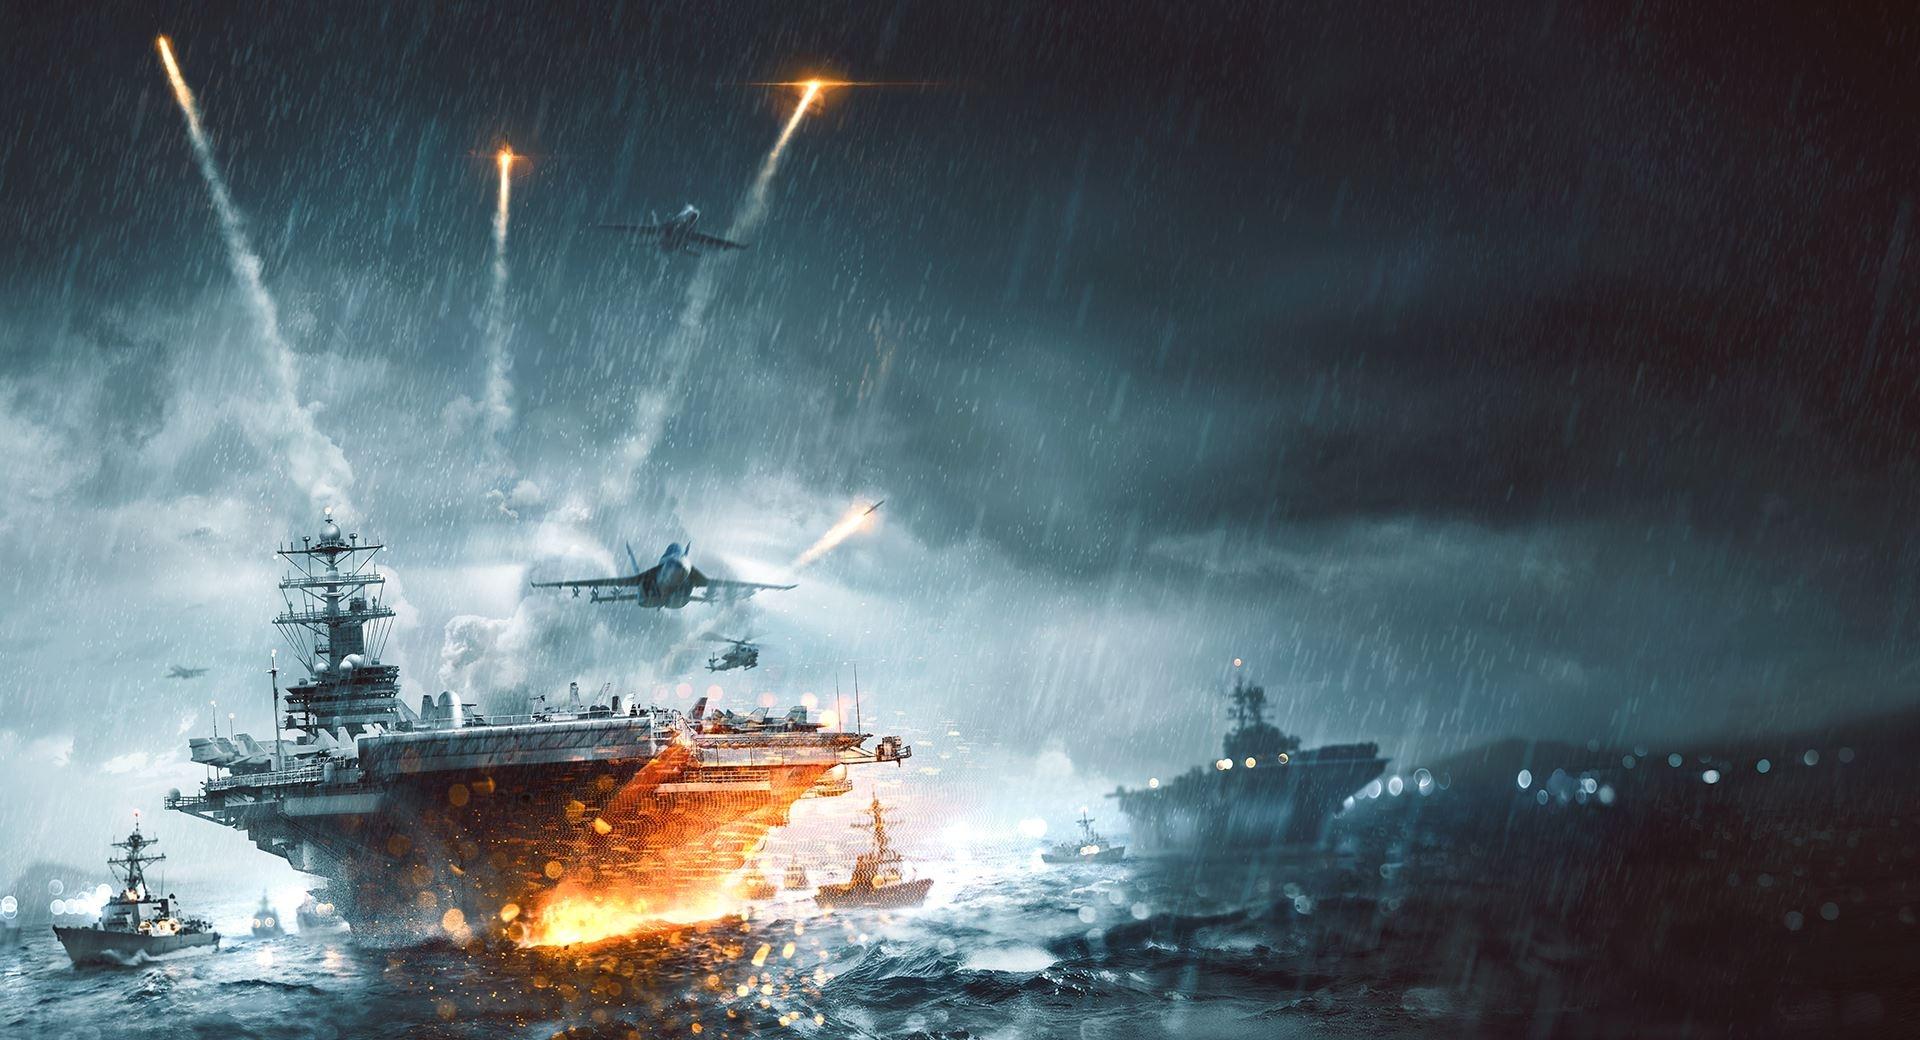 Battlefield 4 Naval Strike at 1024 x 1024 iPad size wallpapers HD quality